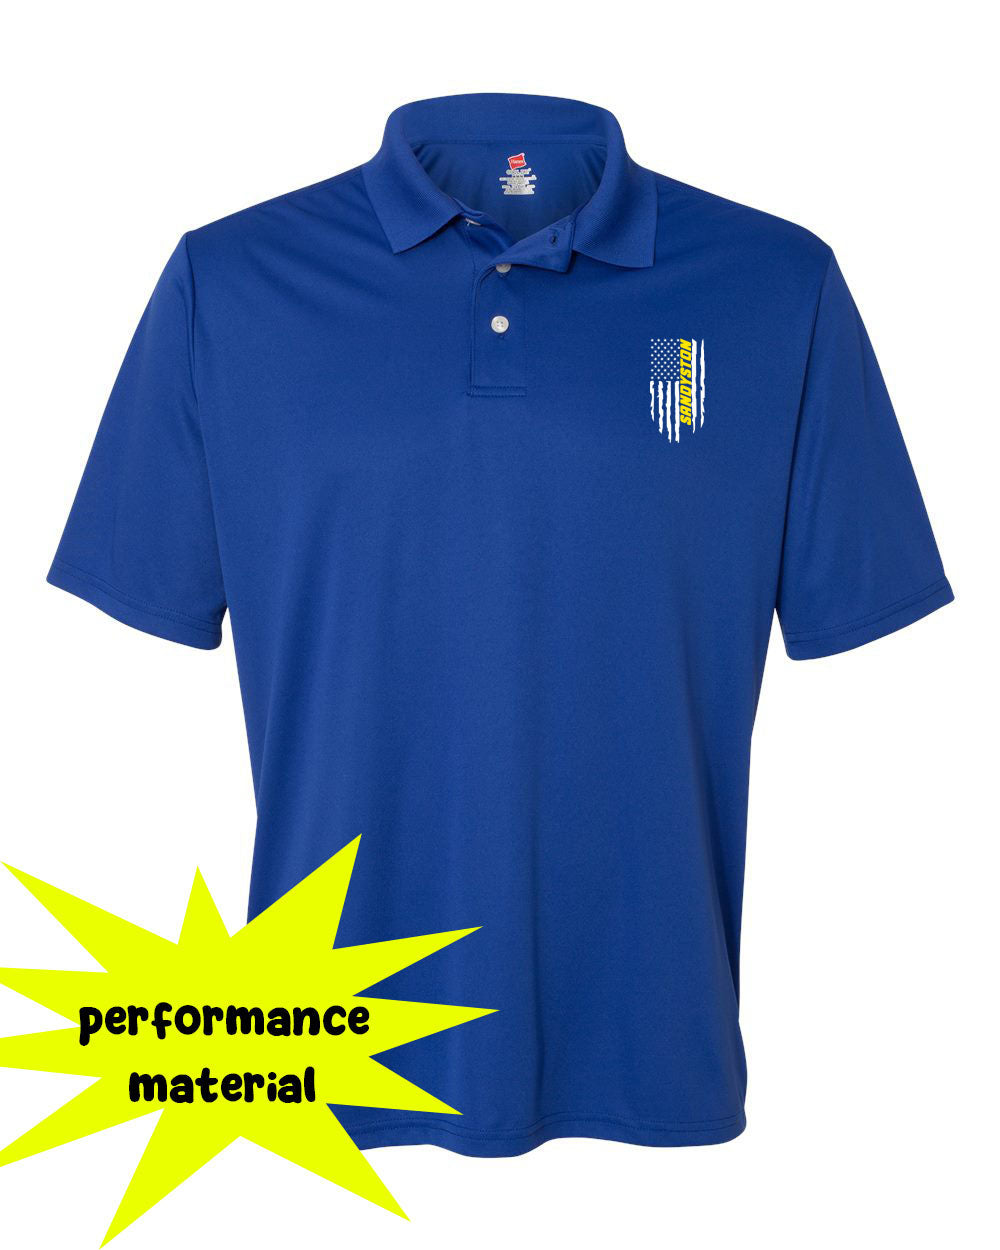 Sandyston Walpack Design 17 Performance Material Polo T-Shirt